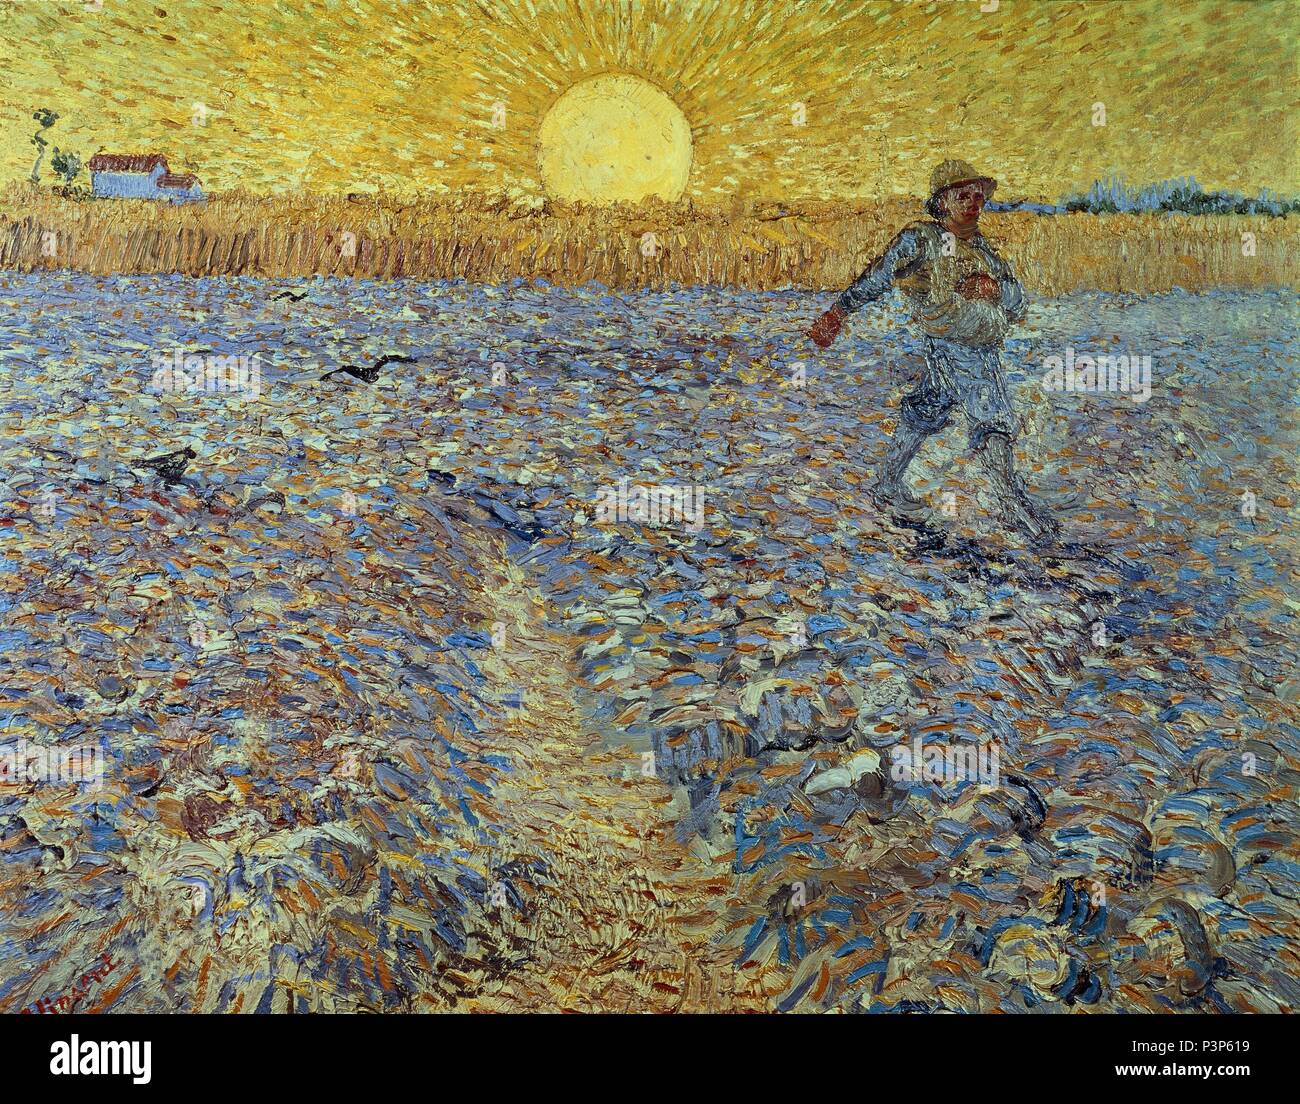 Niederländische Schule. Sämann mit Setting Sun 1888. Öl auf Leinwand (64 x 80,5 cm). Rijksmuseum Kröller-Müller, Otterlo. Autor: Vincent van Gogh (1853-1890). Lage: MUSEO KROLLER-MULLER, OTTERLO, HOLANDA. Stockfoto